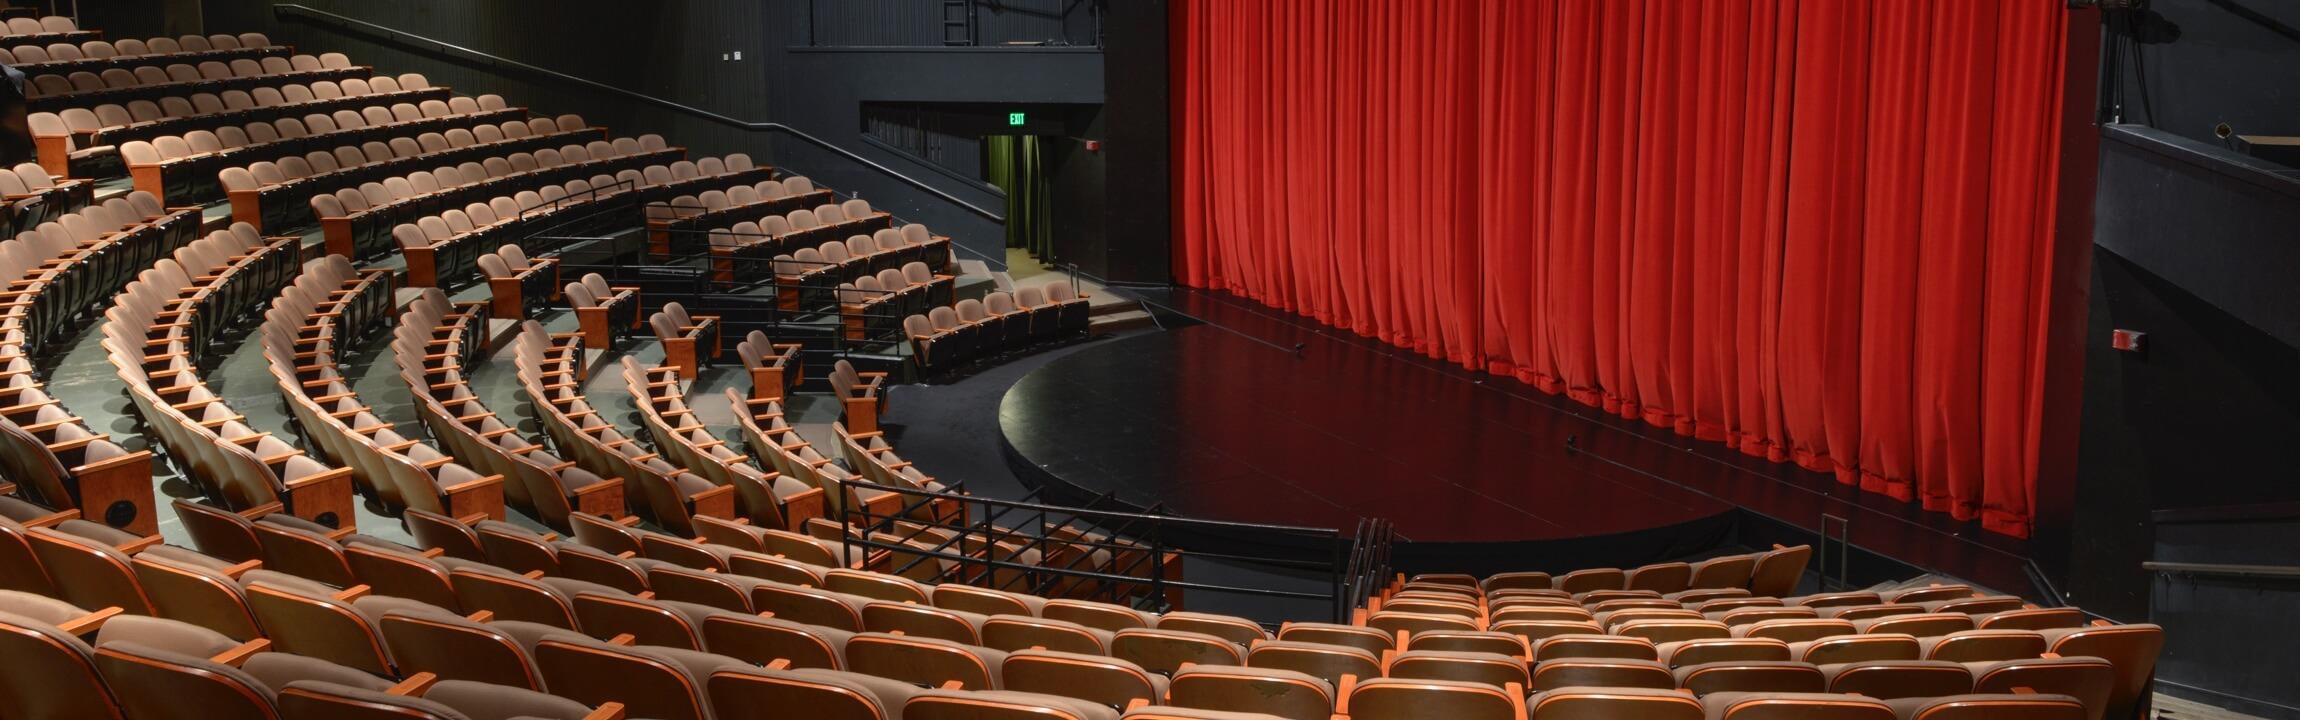 Grand curtain and theater interior at the Cornish Playhouse Main Auditorium